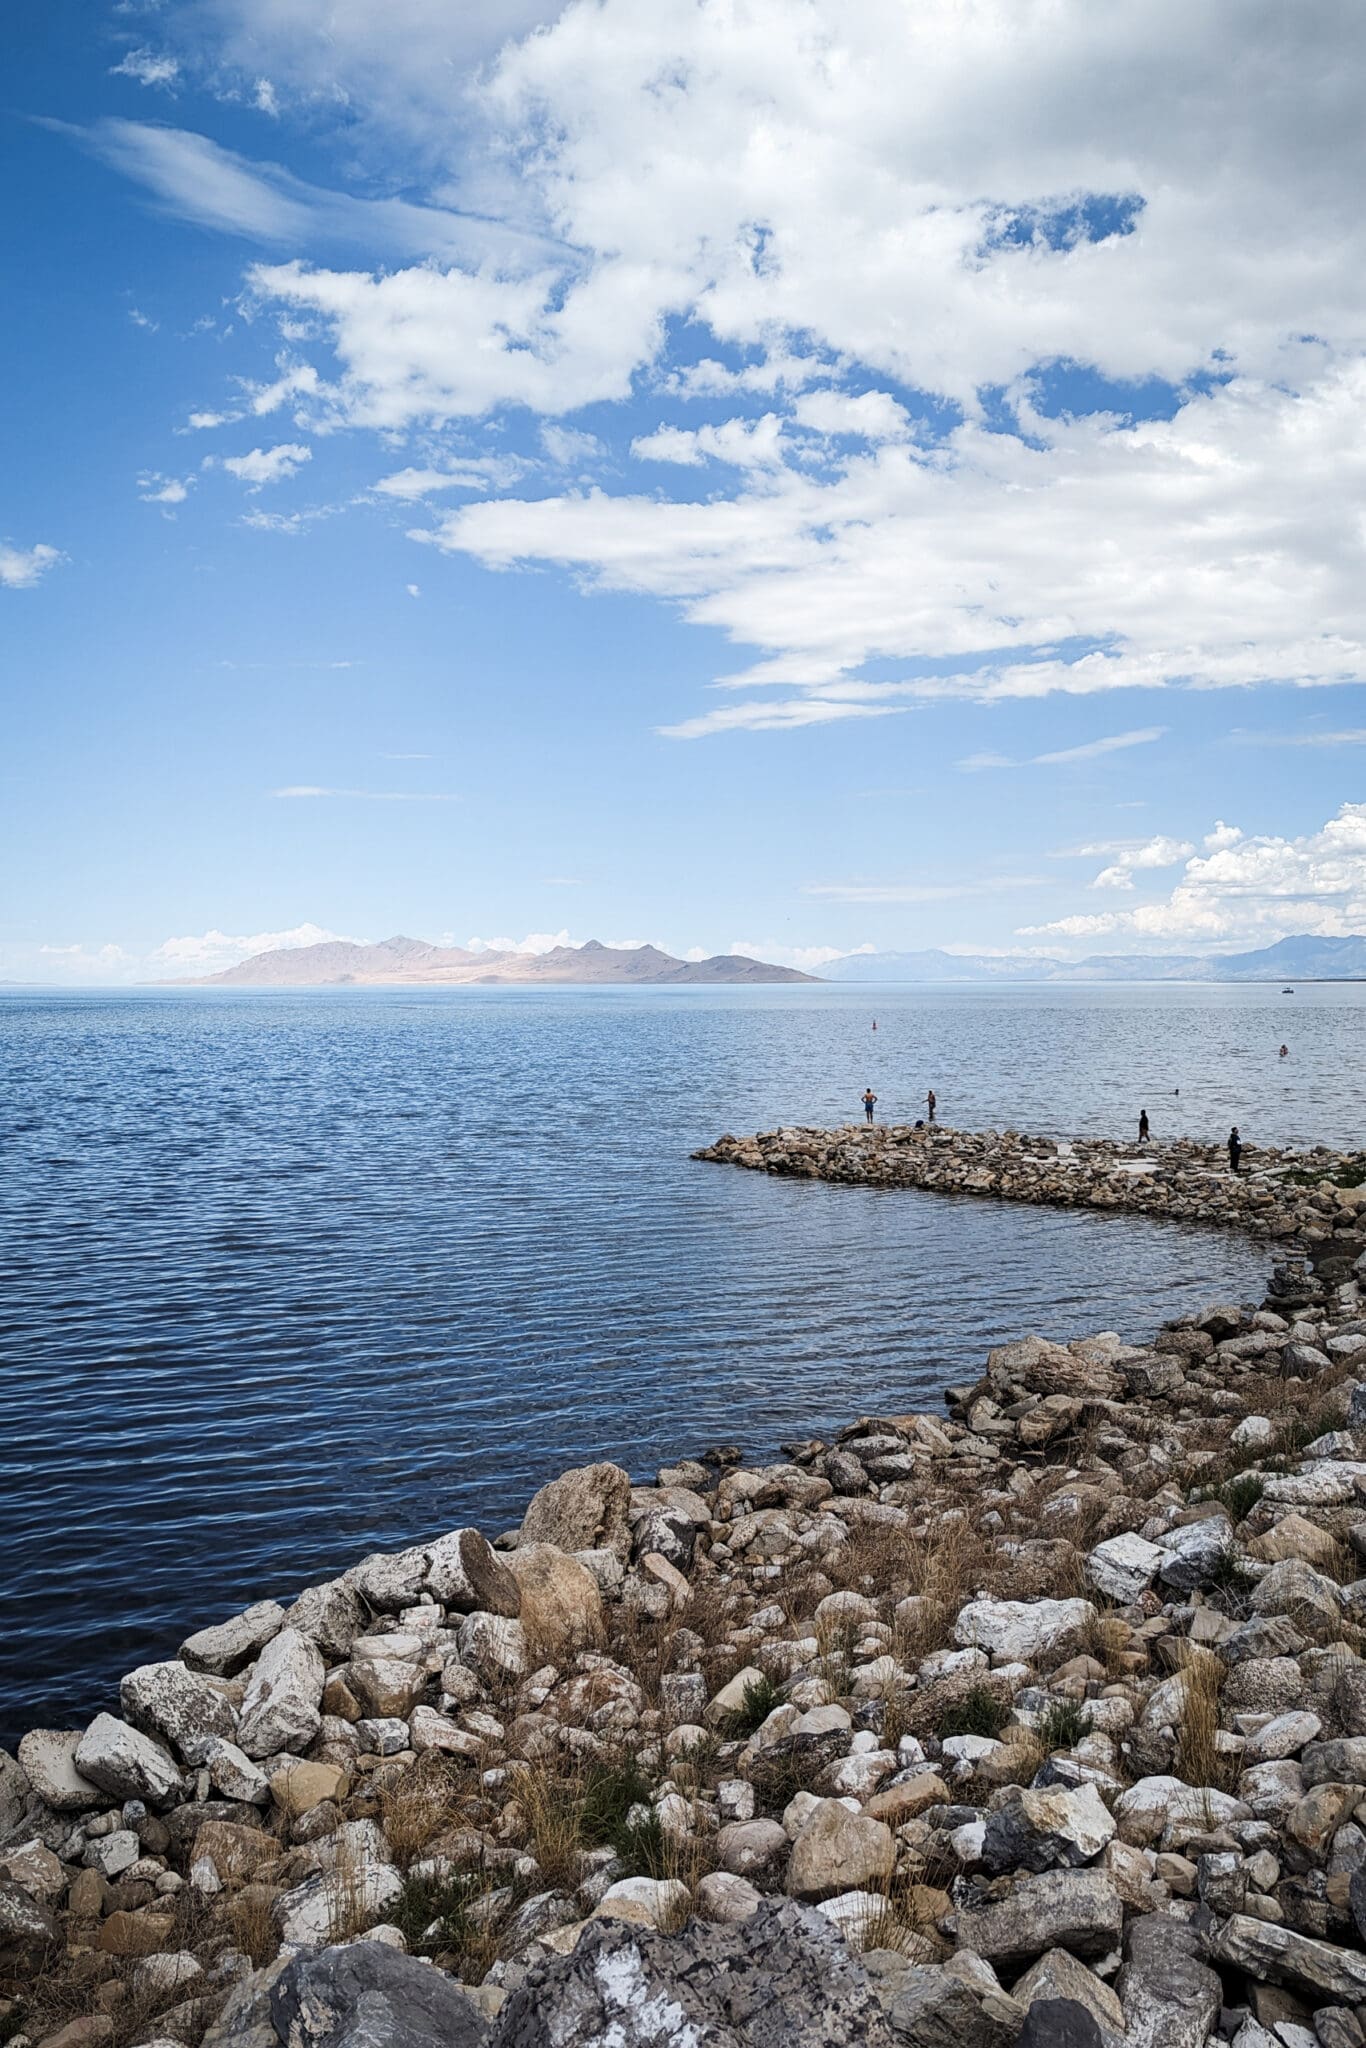 View of Great Salt Lake